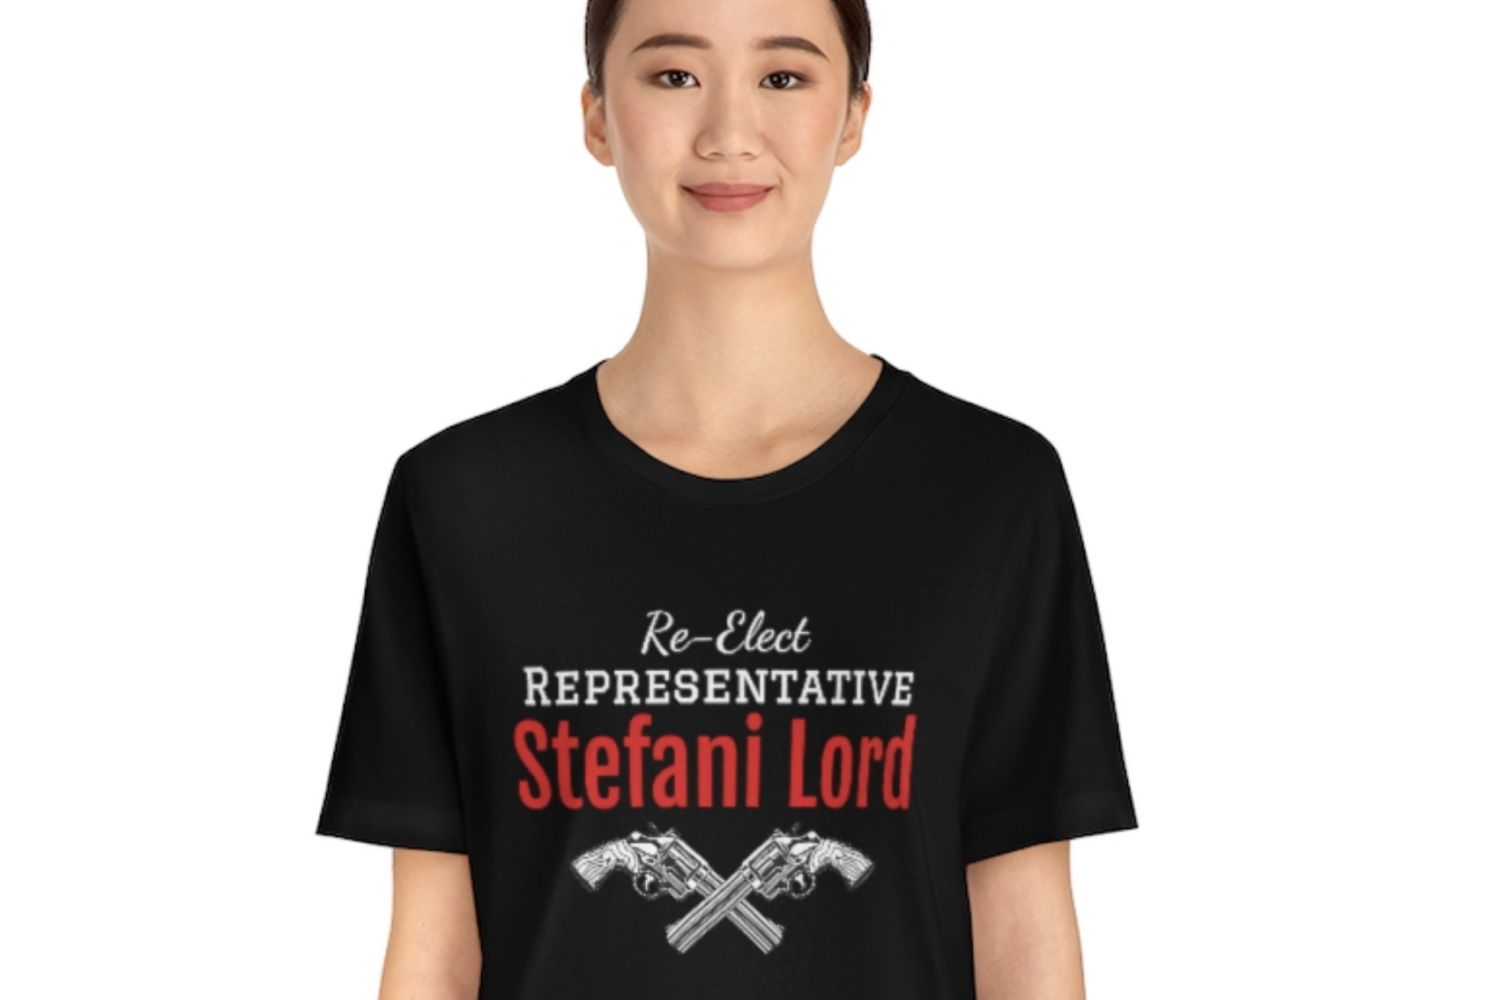 Stefani Lord Shirt